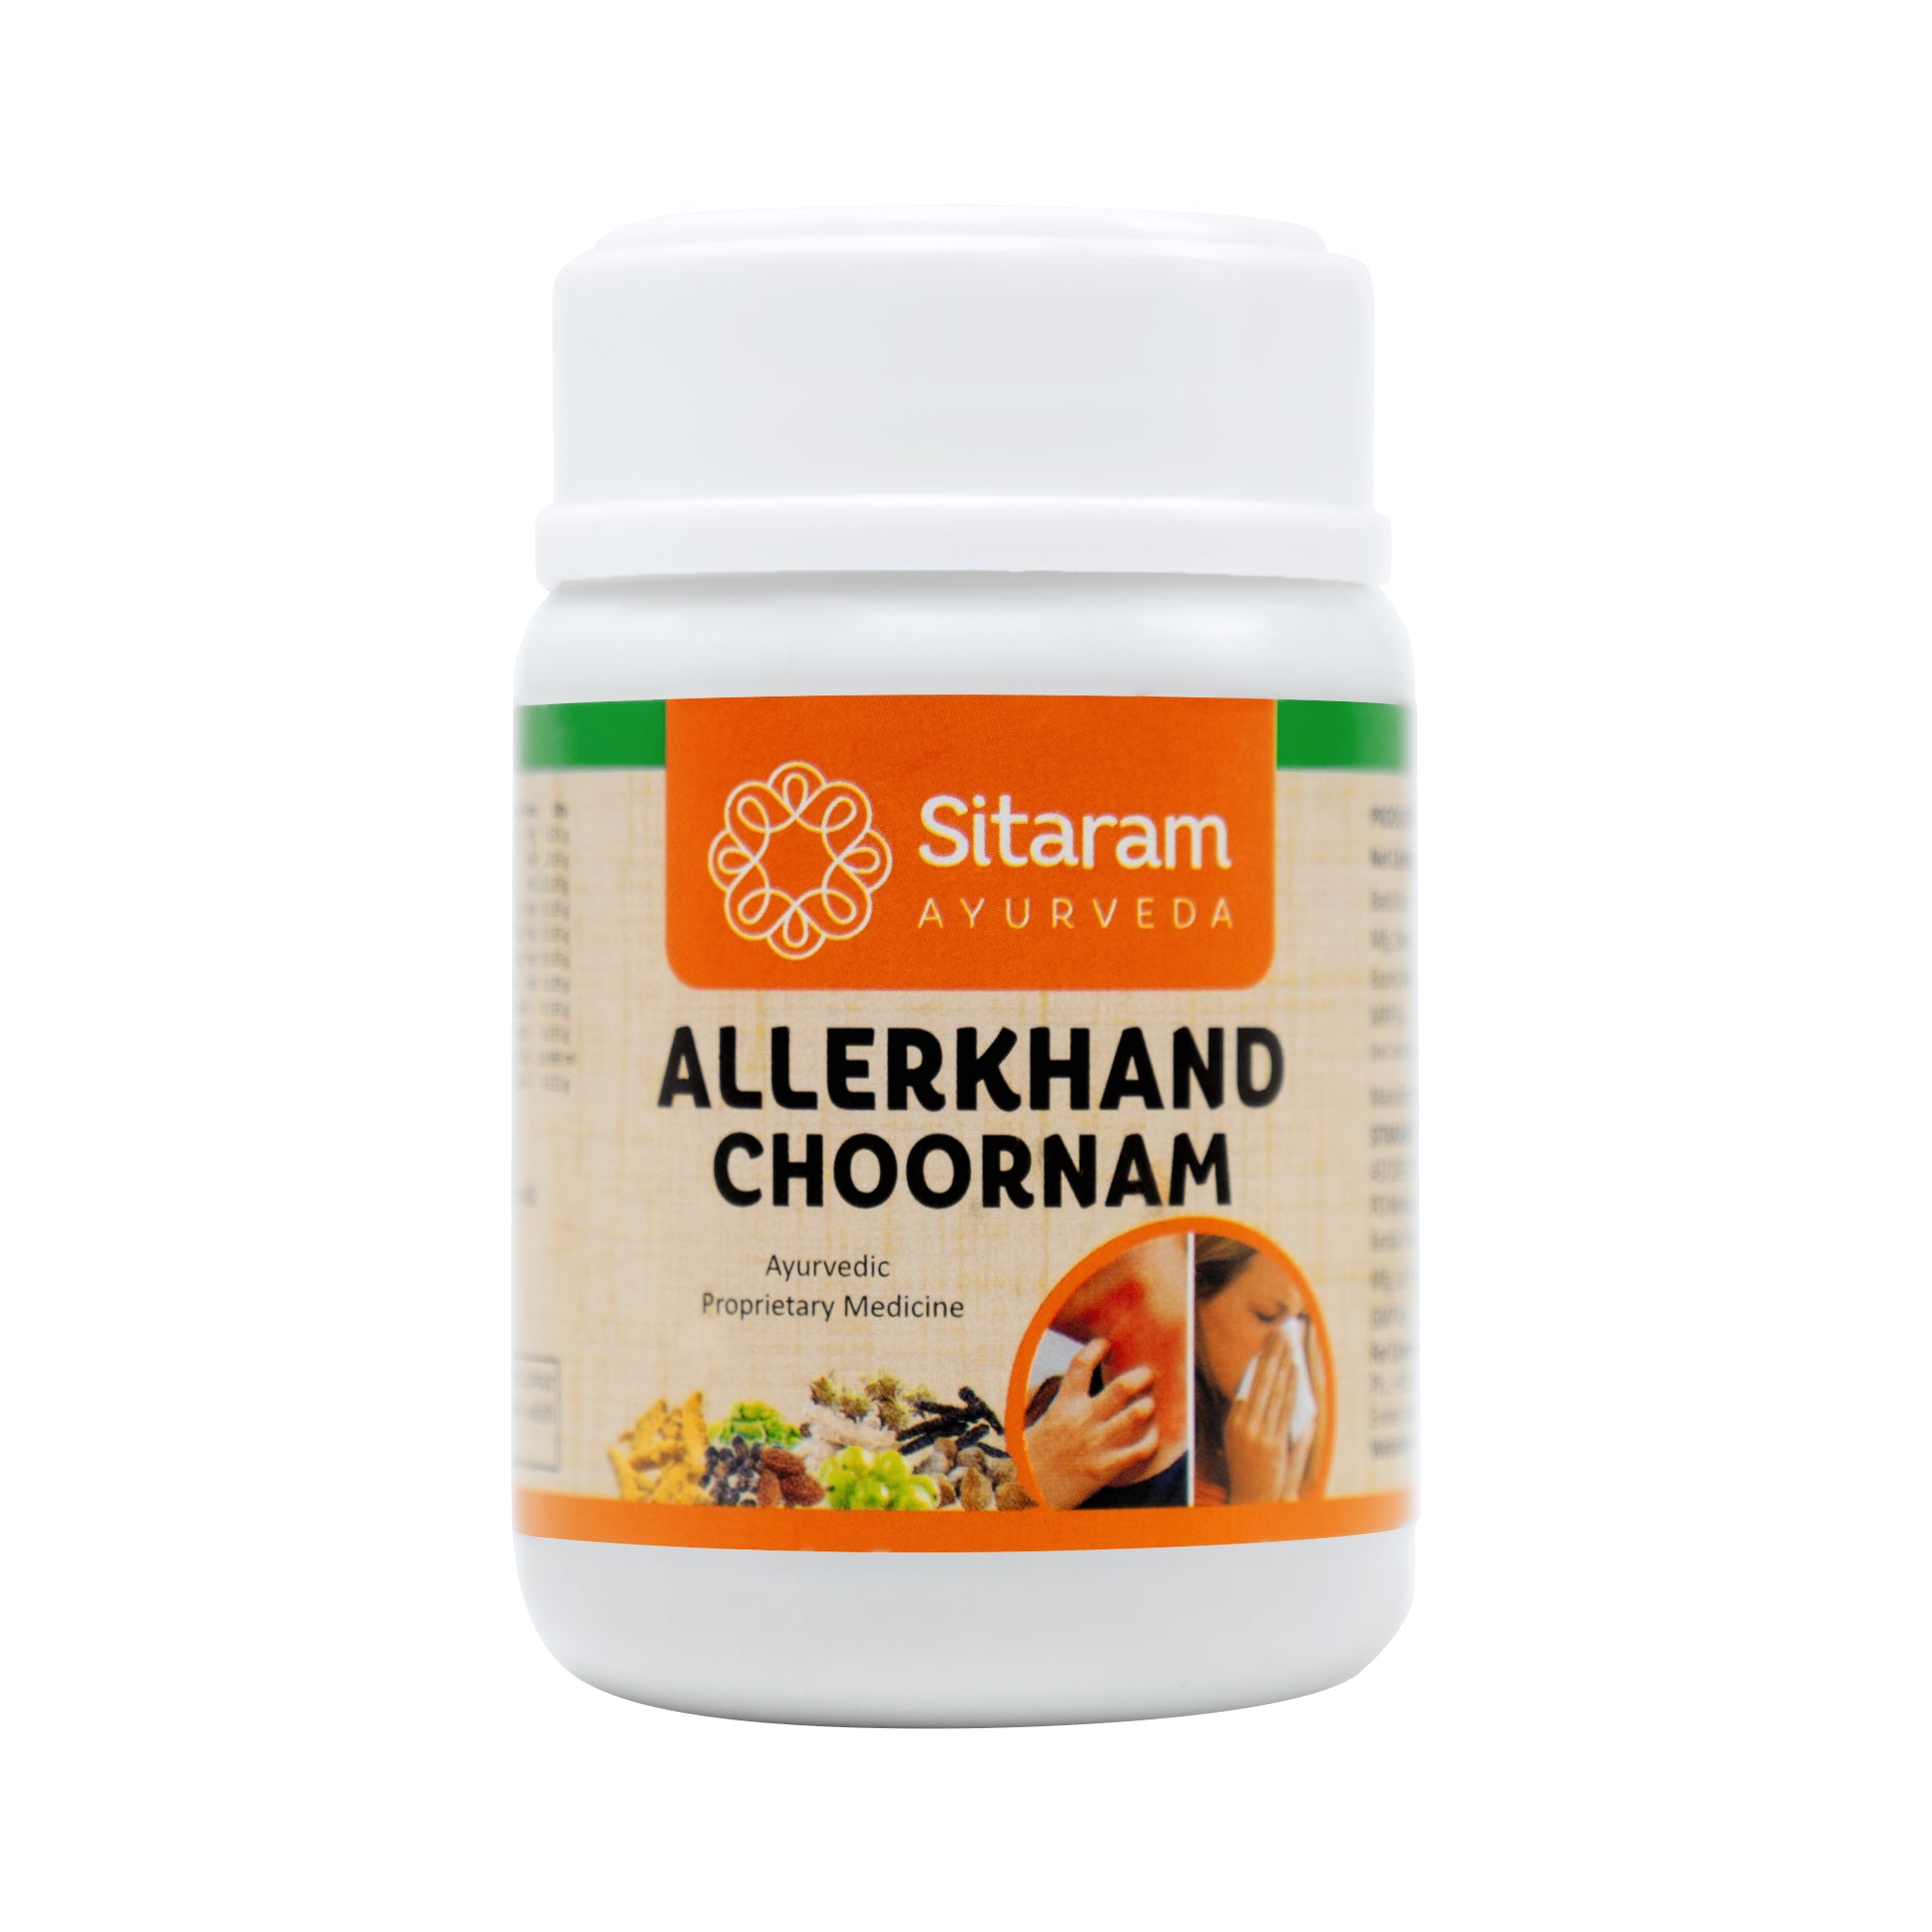 Sitaram Ayurveda Alerkhand Choornam 50Grm - Pack of 2 (Prescription Medication)